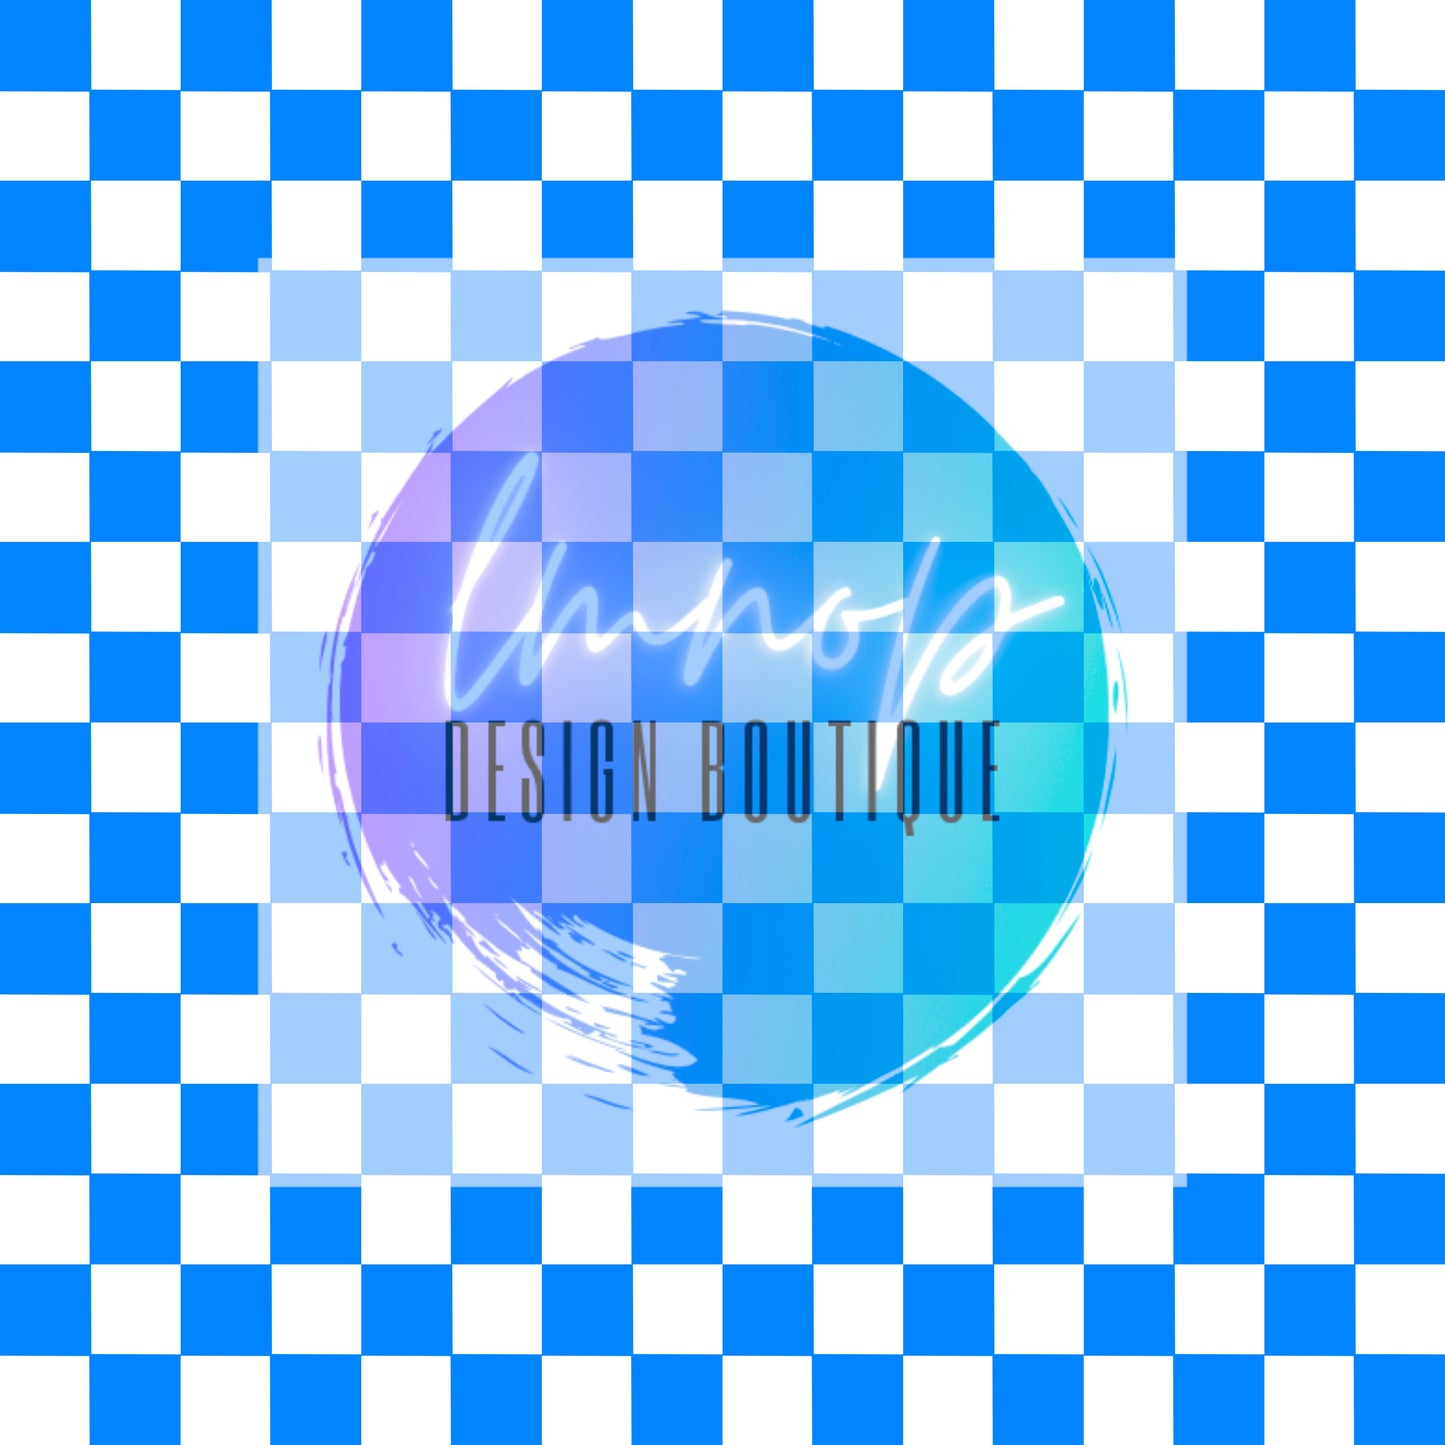 Checkers - Blue